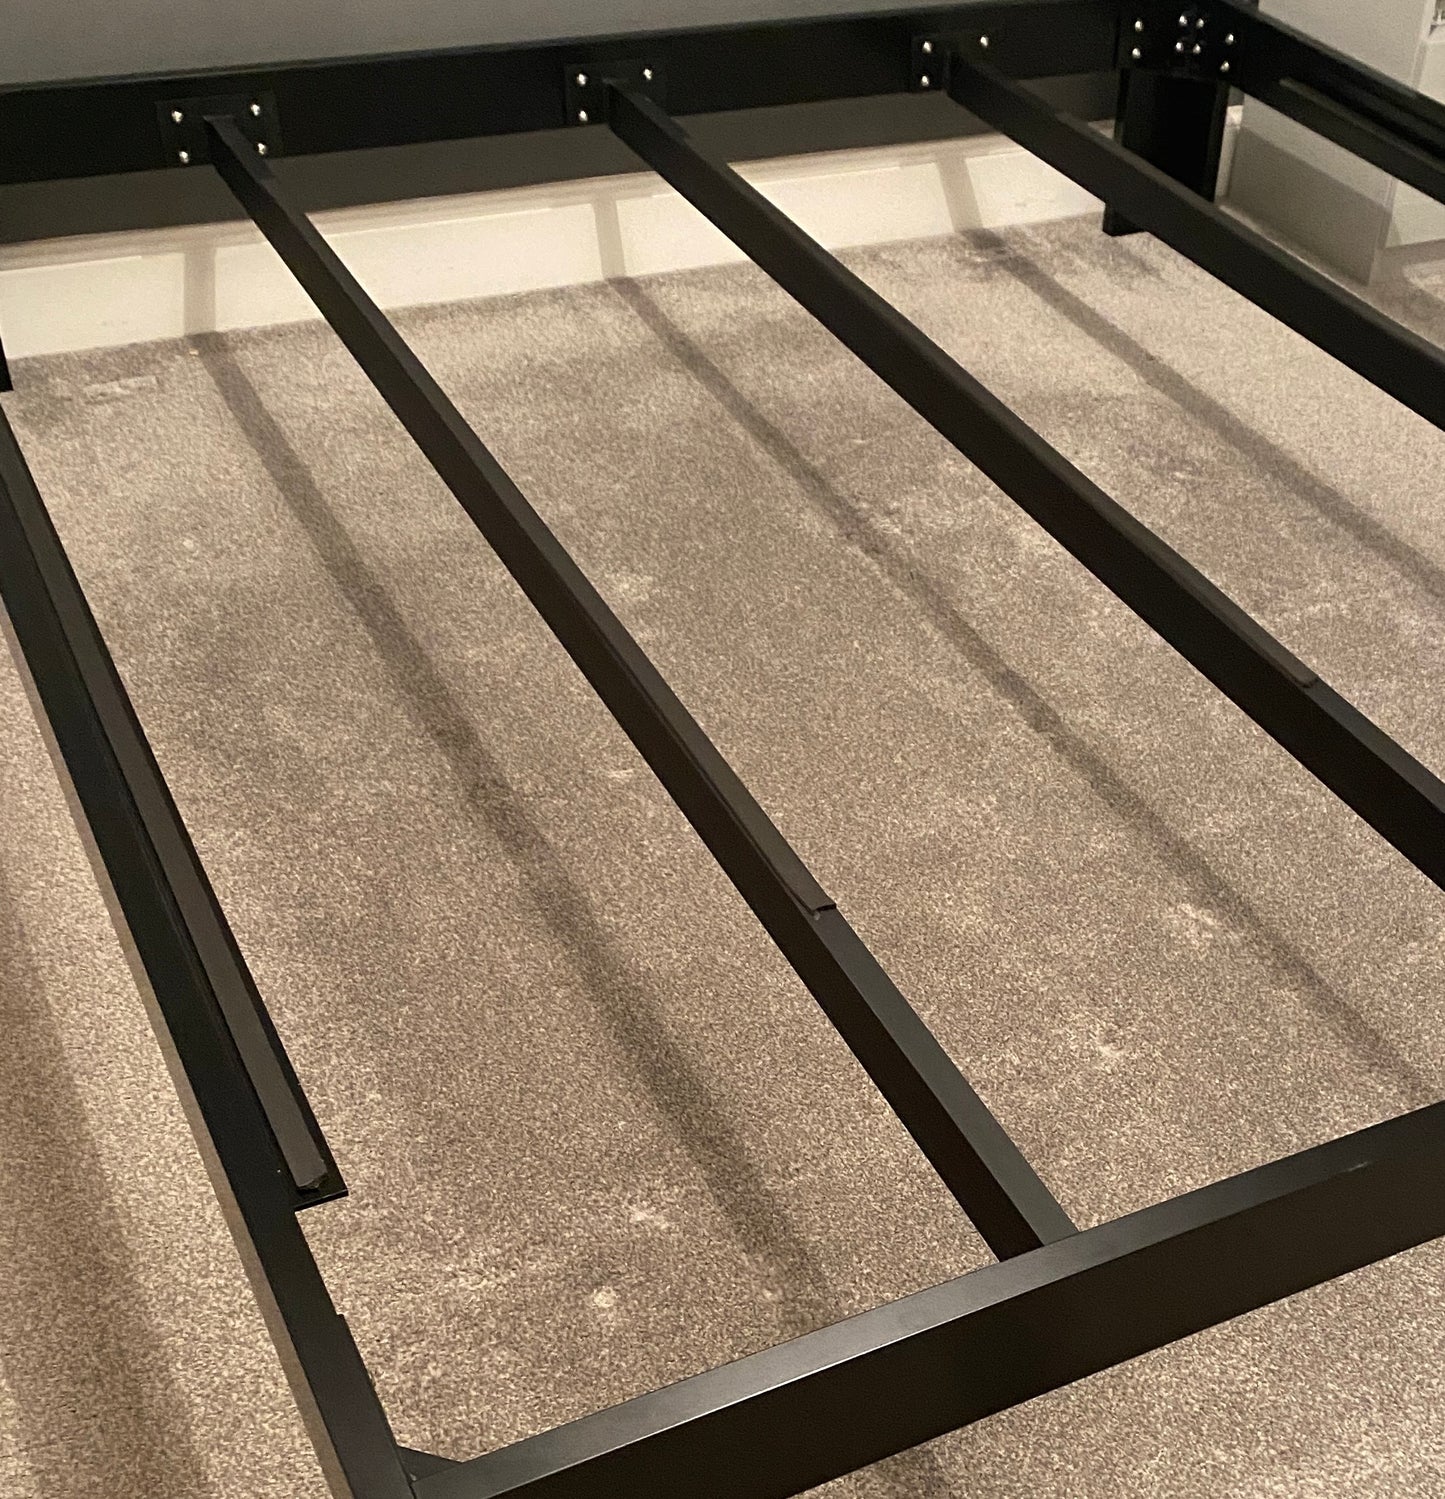 Aluminium Metal King Size Bed Frame - RESS Furniture Ltd. Aluminium Frame